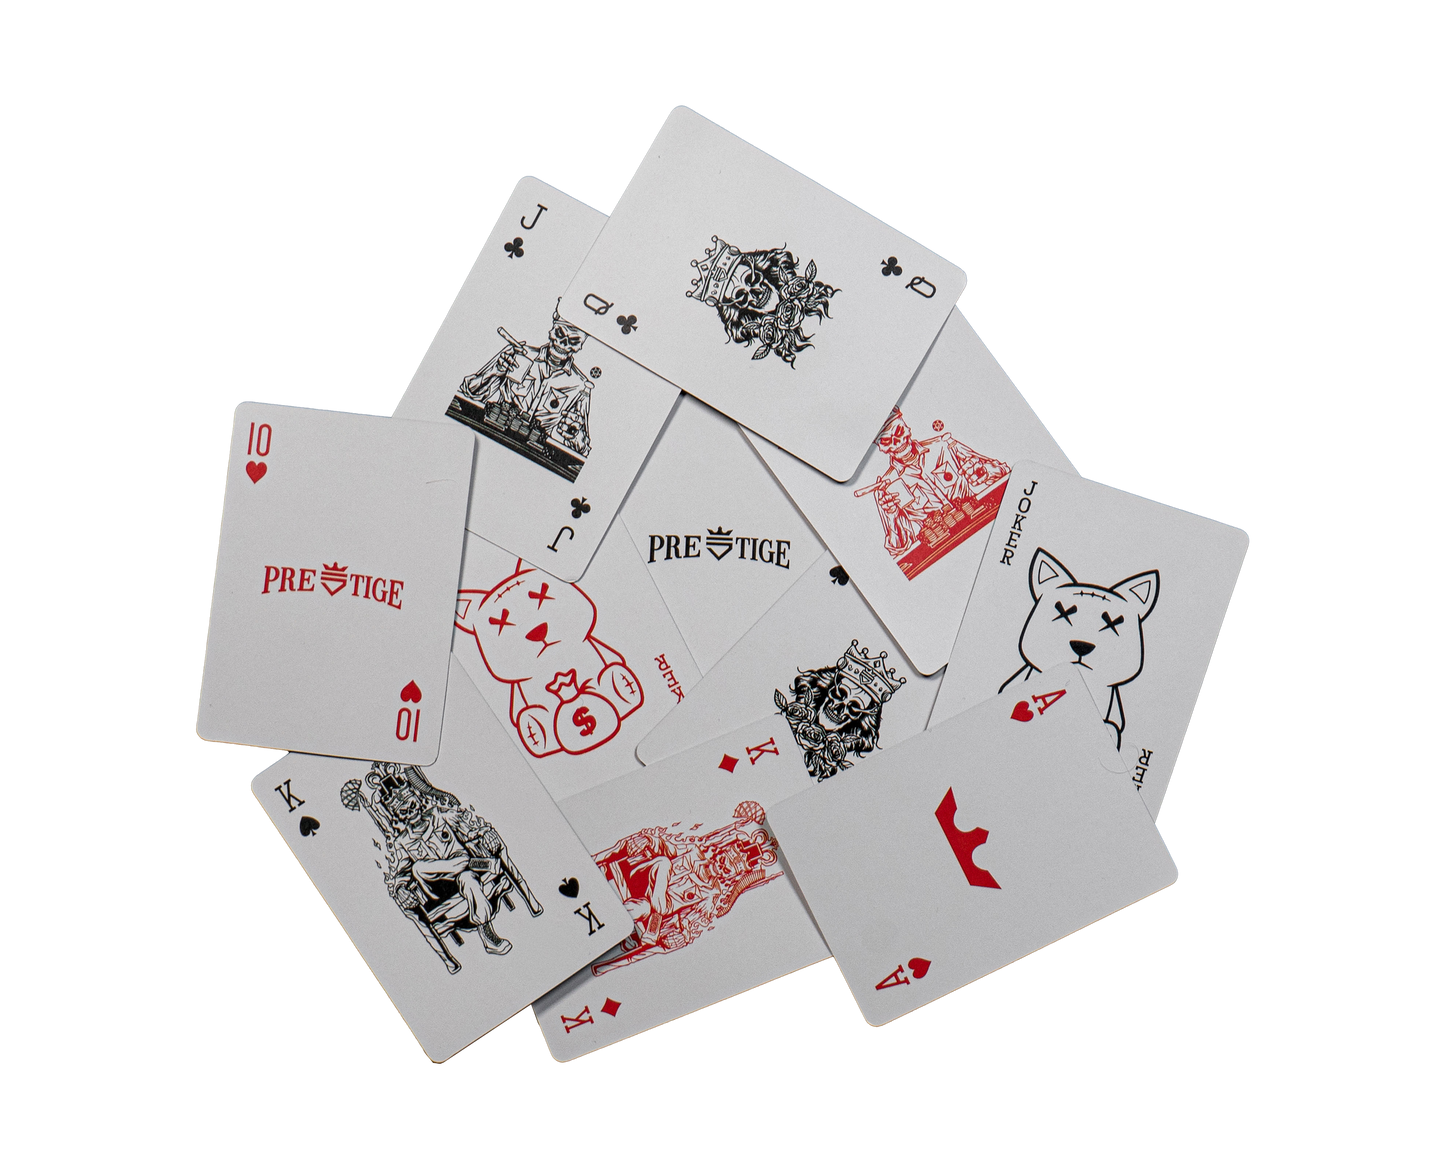 RNL x Prestige Playing Cards